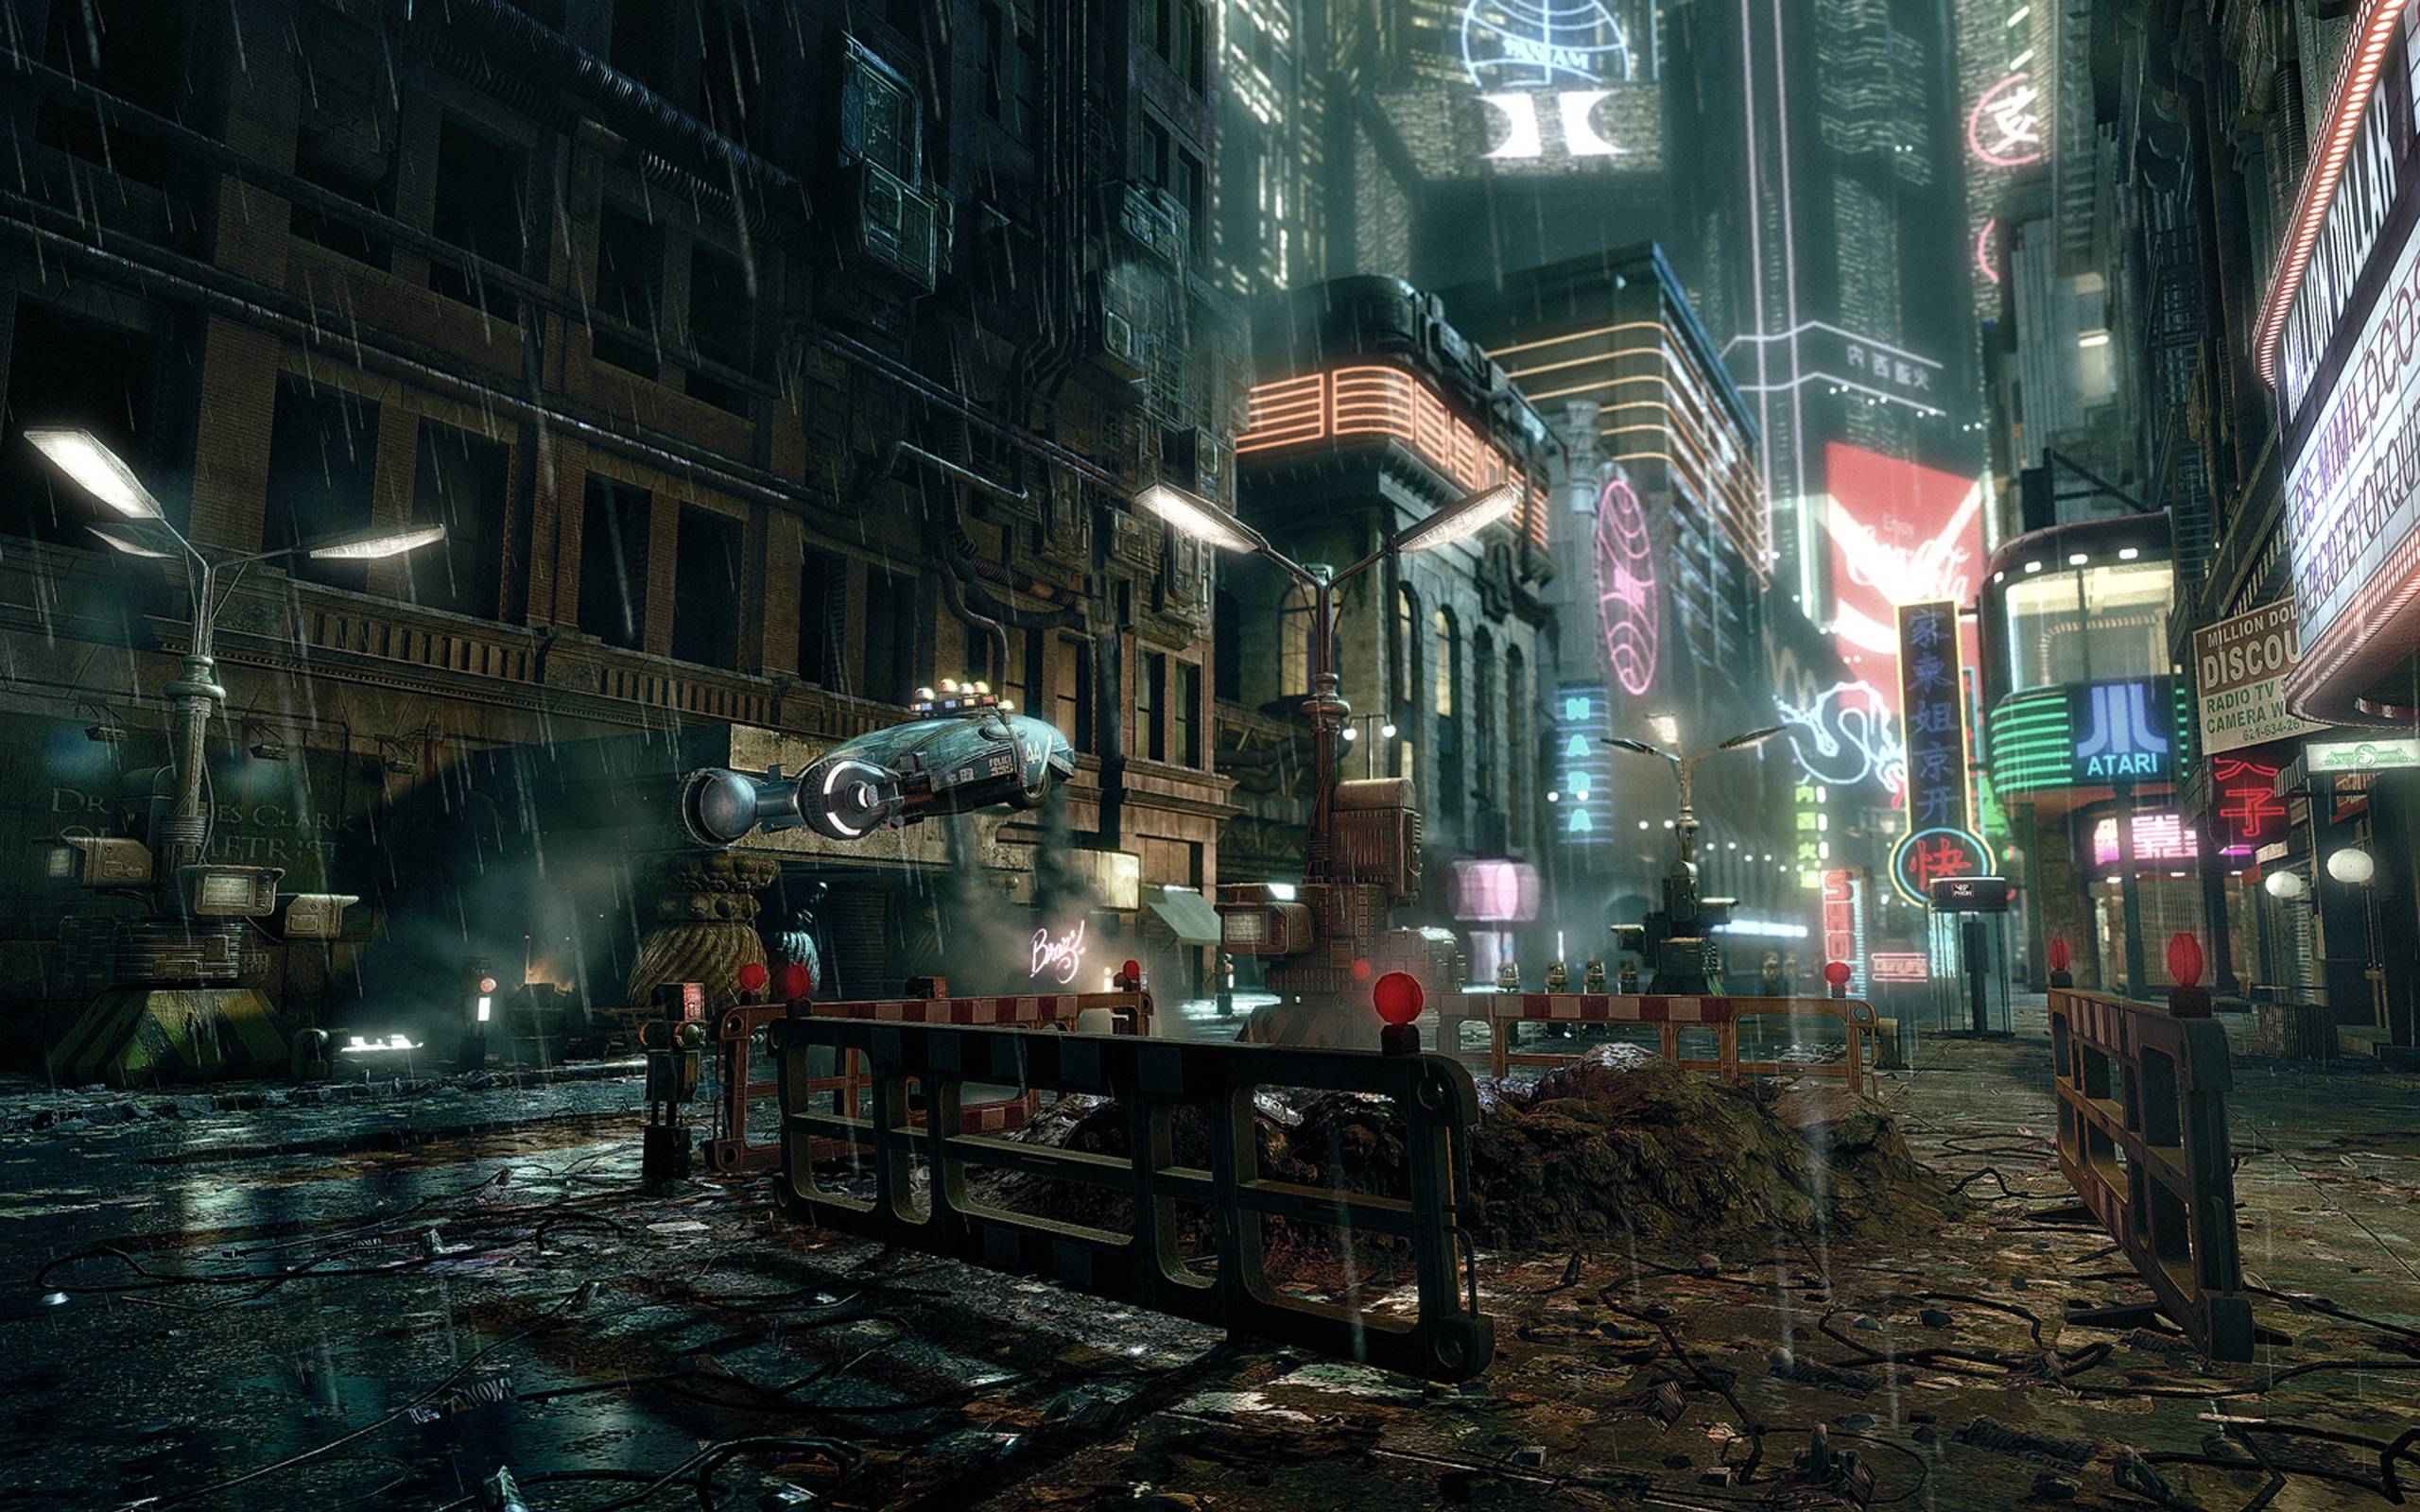 200+] Cyberpunk City Wallpapers